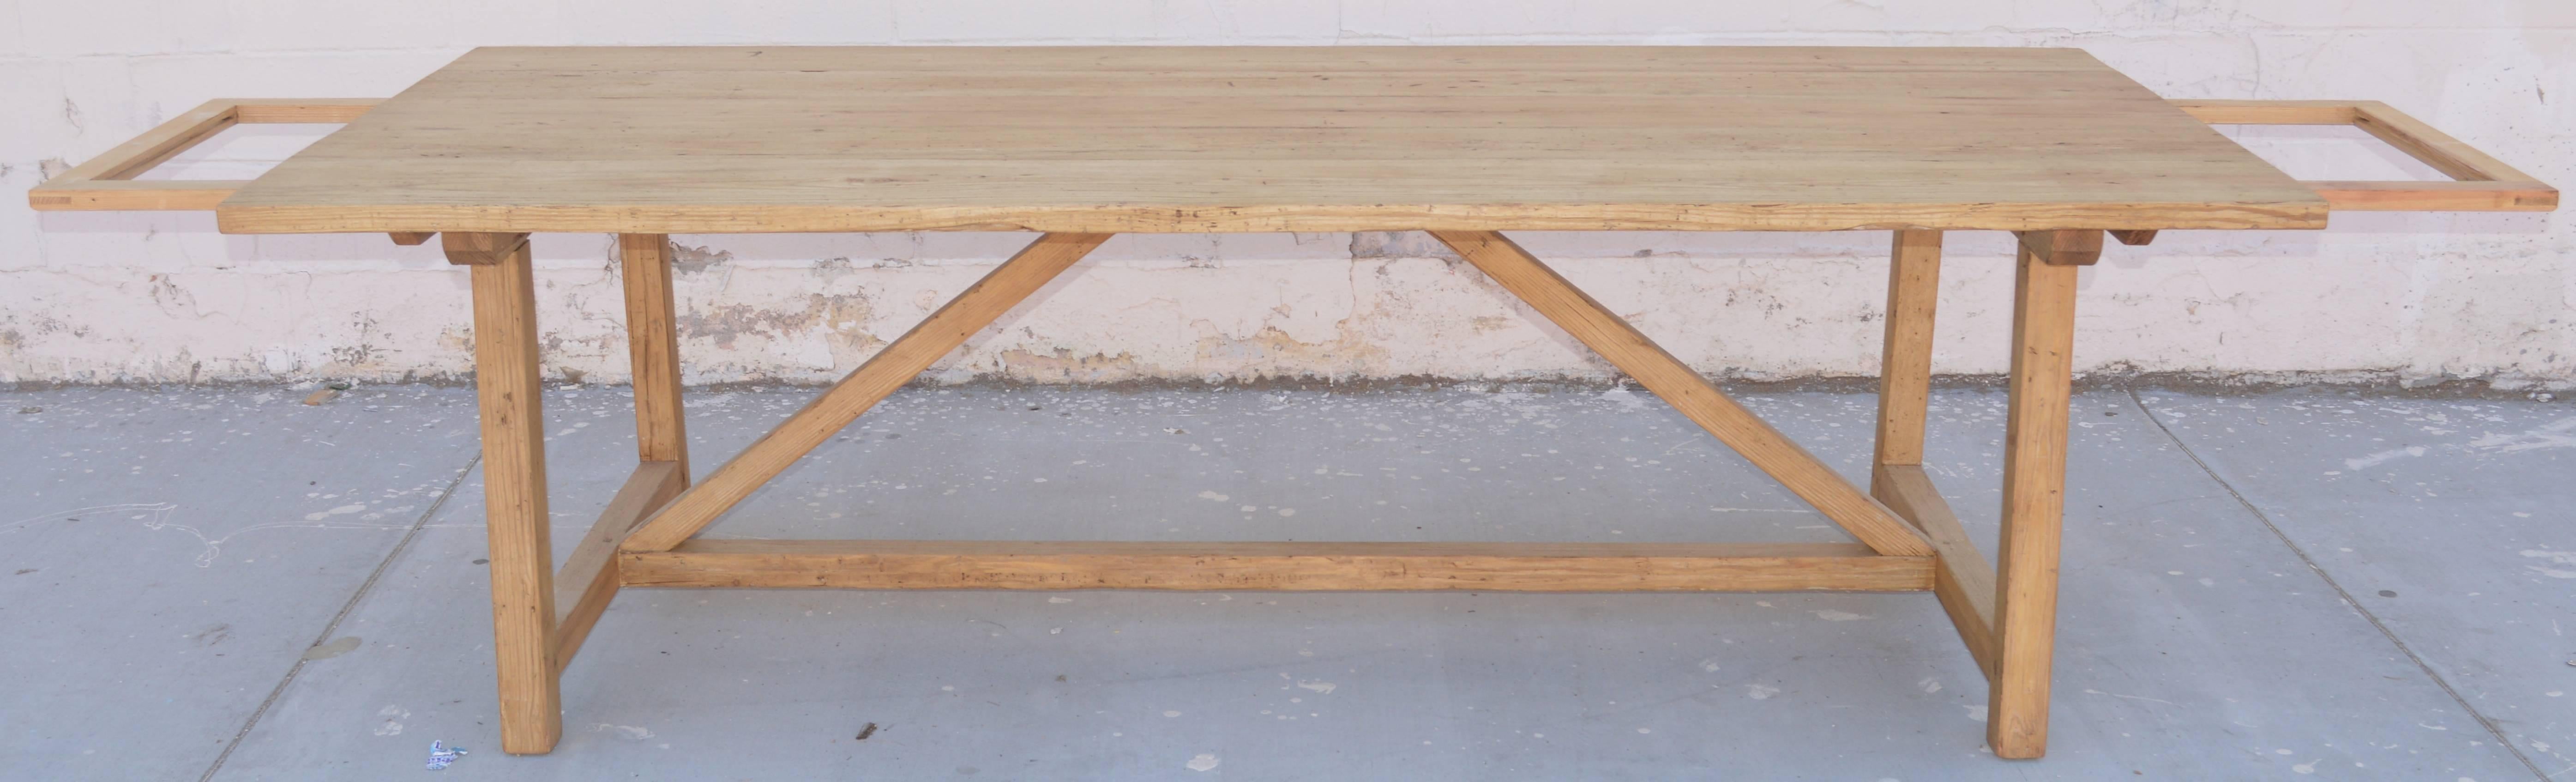 custom reclaimed wood tables los angeles